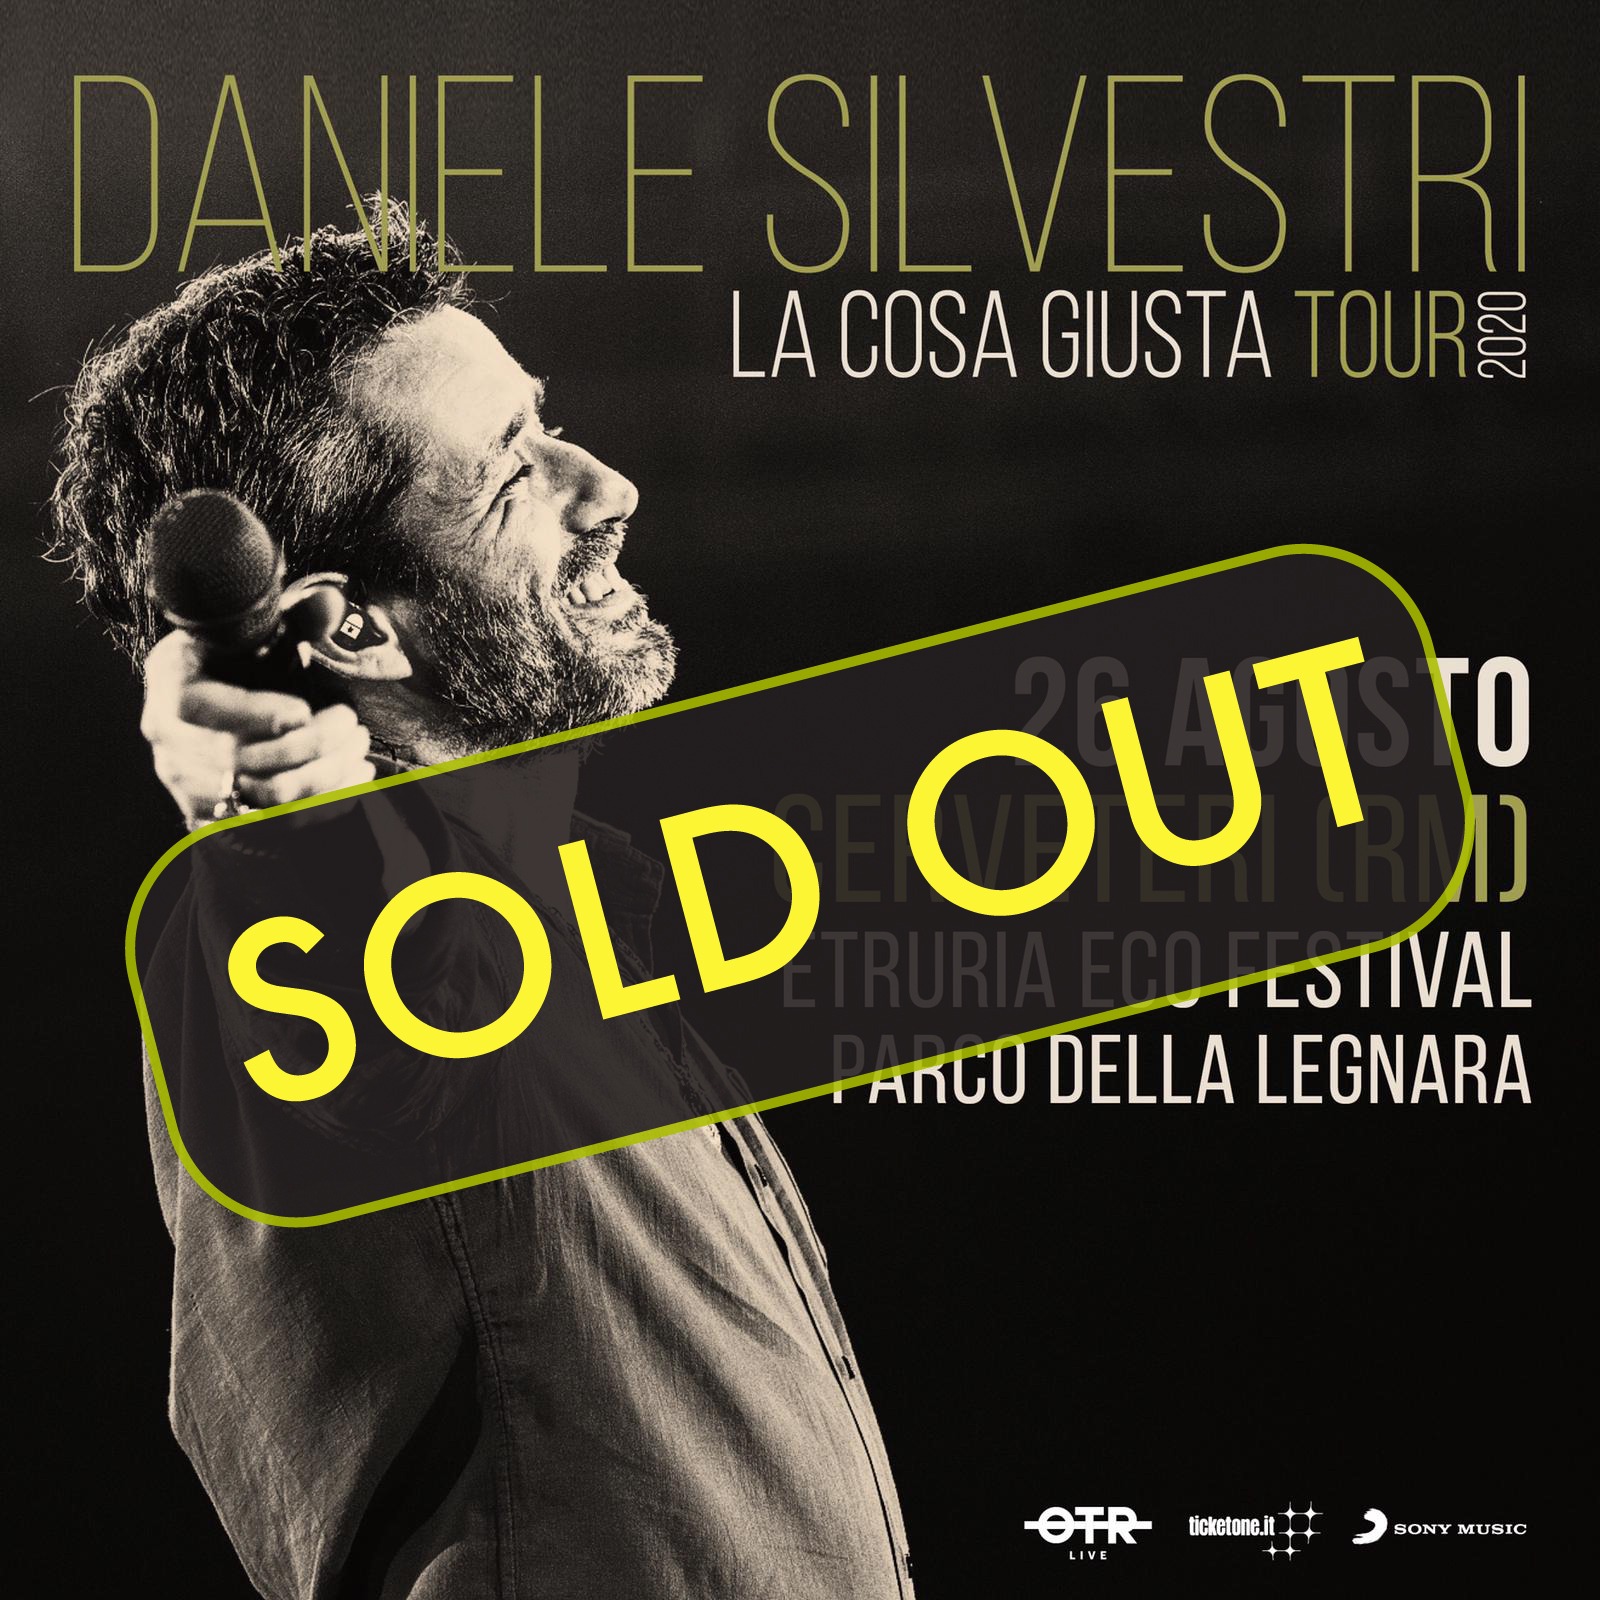 Daniele Silvestri concerto sold out